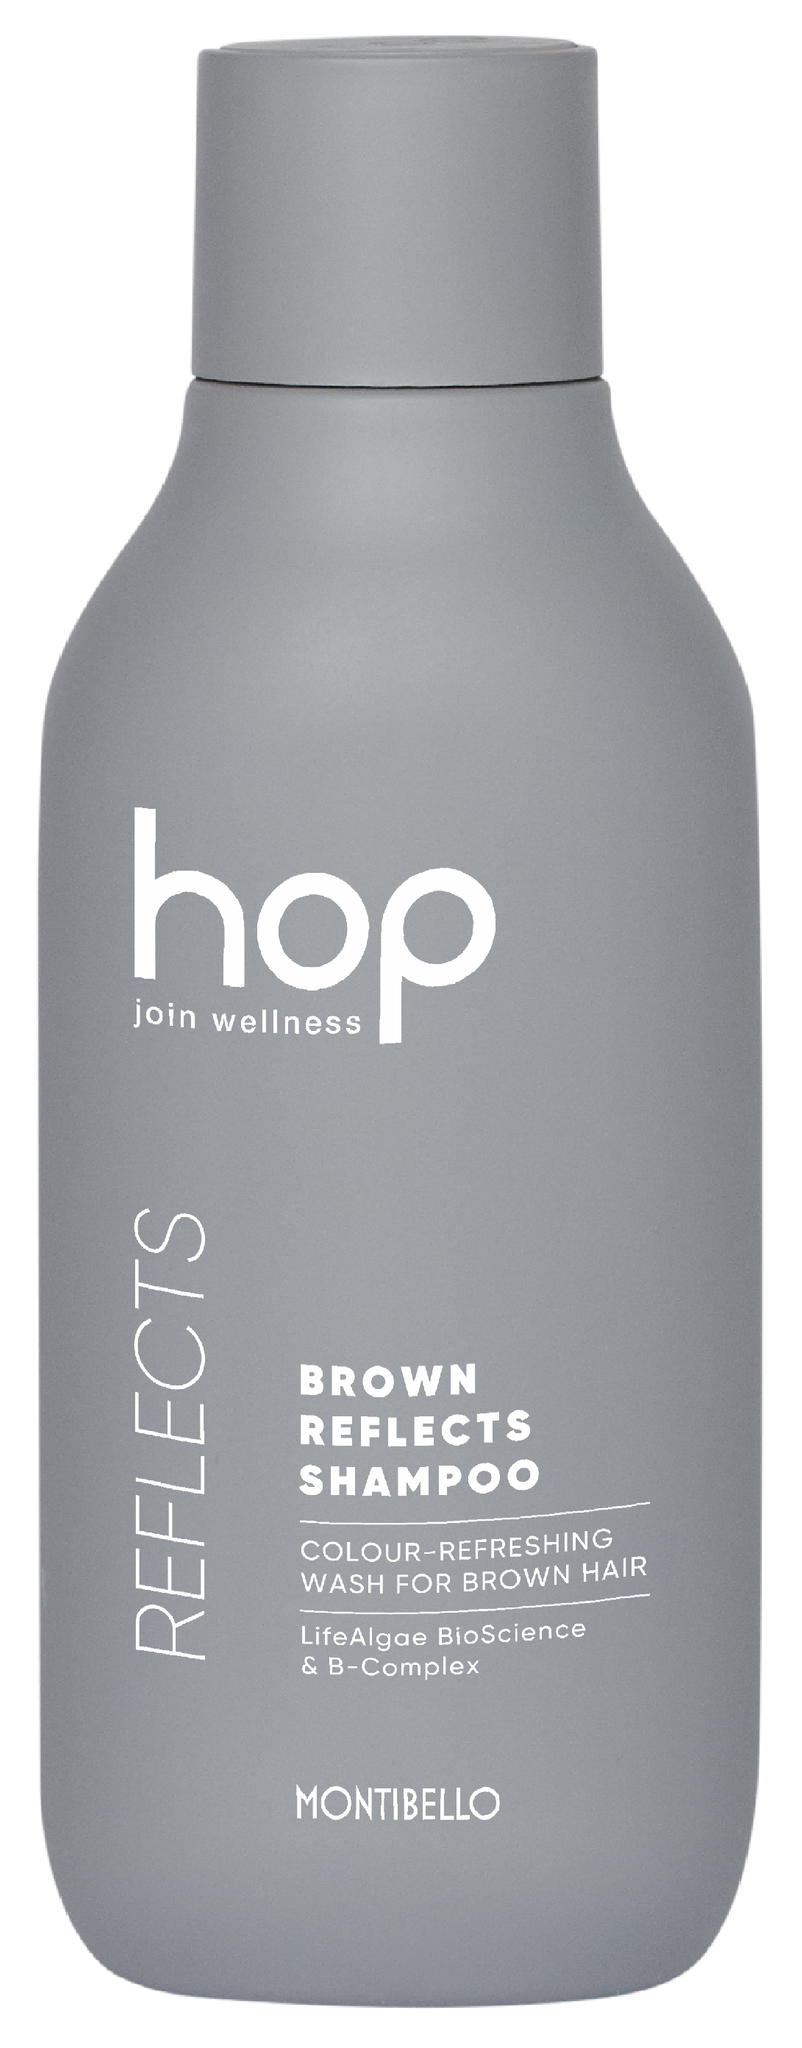 Montibello Hop | Brown Reflects Shampoo 300ml